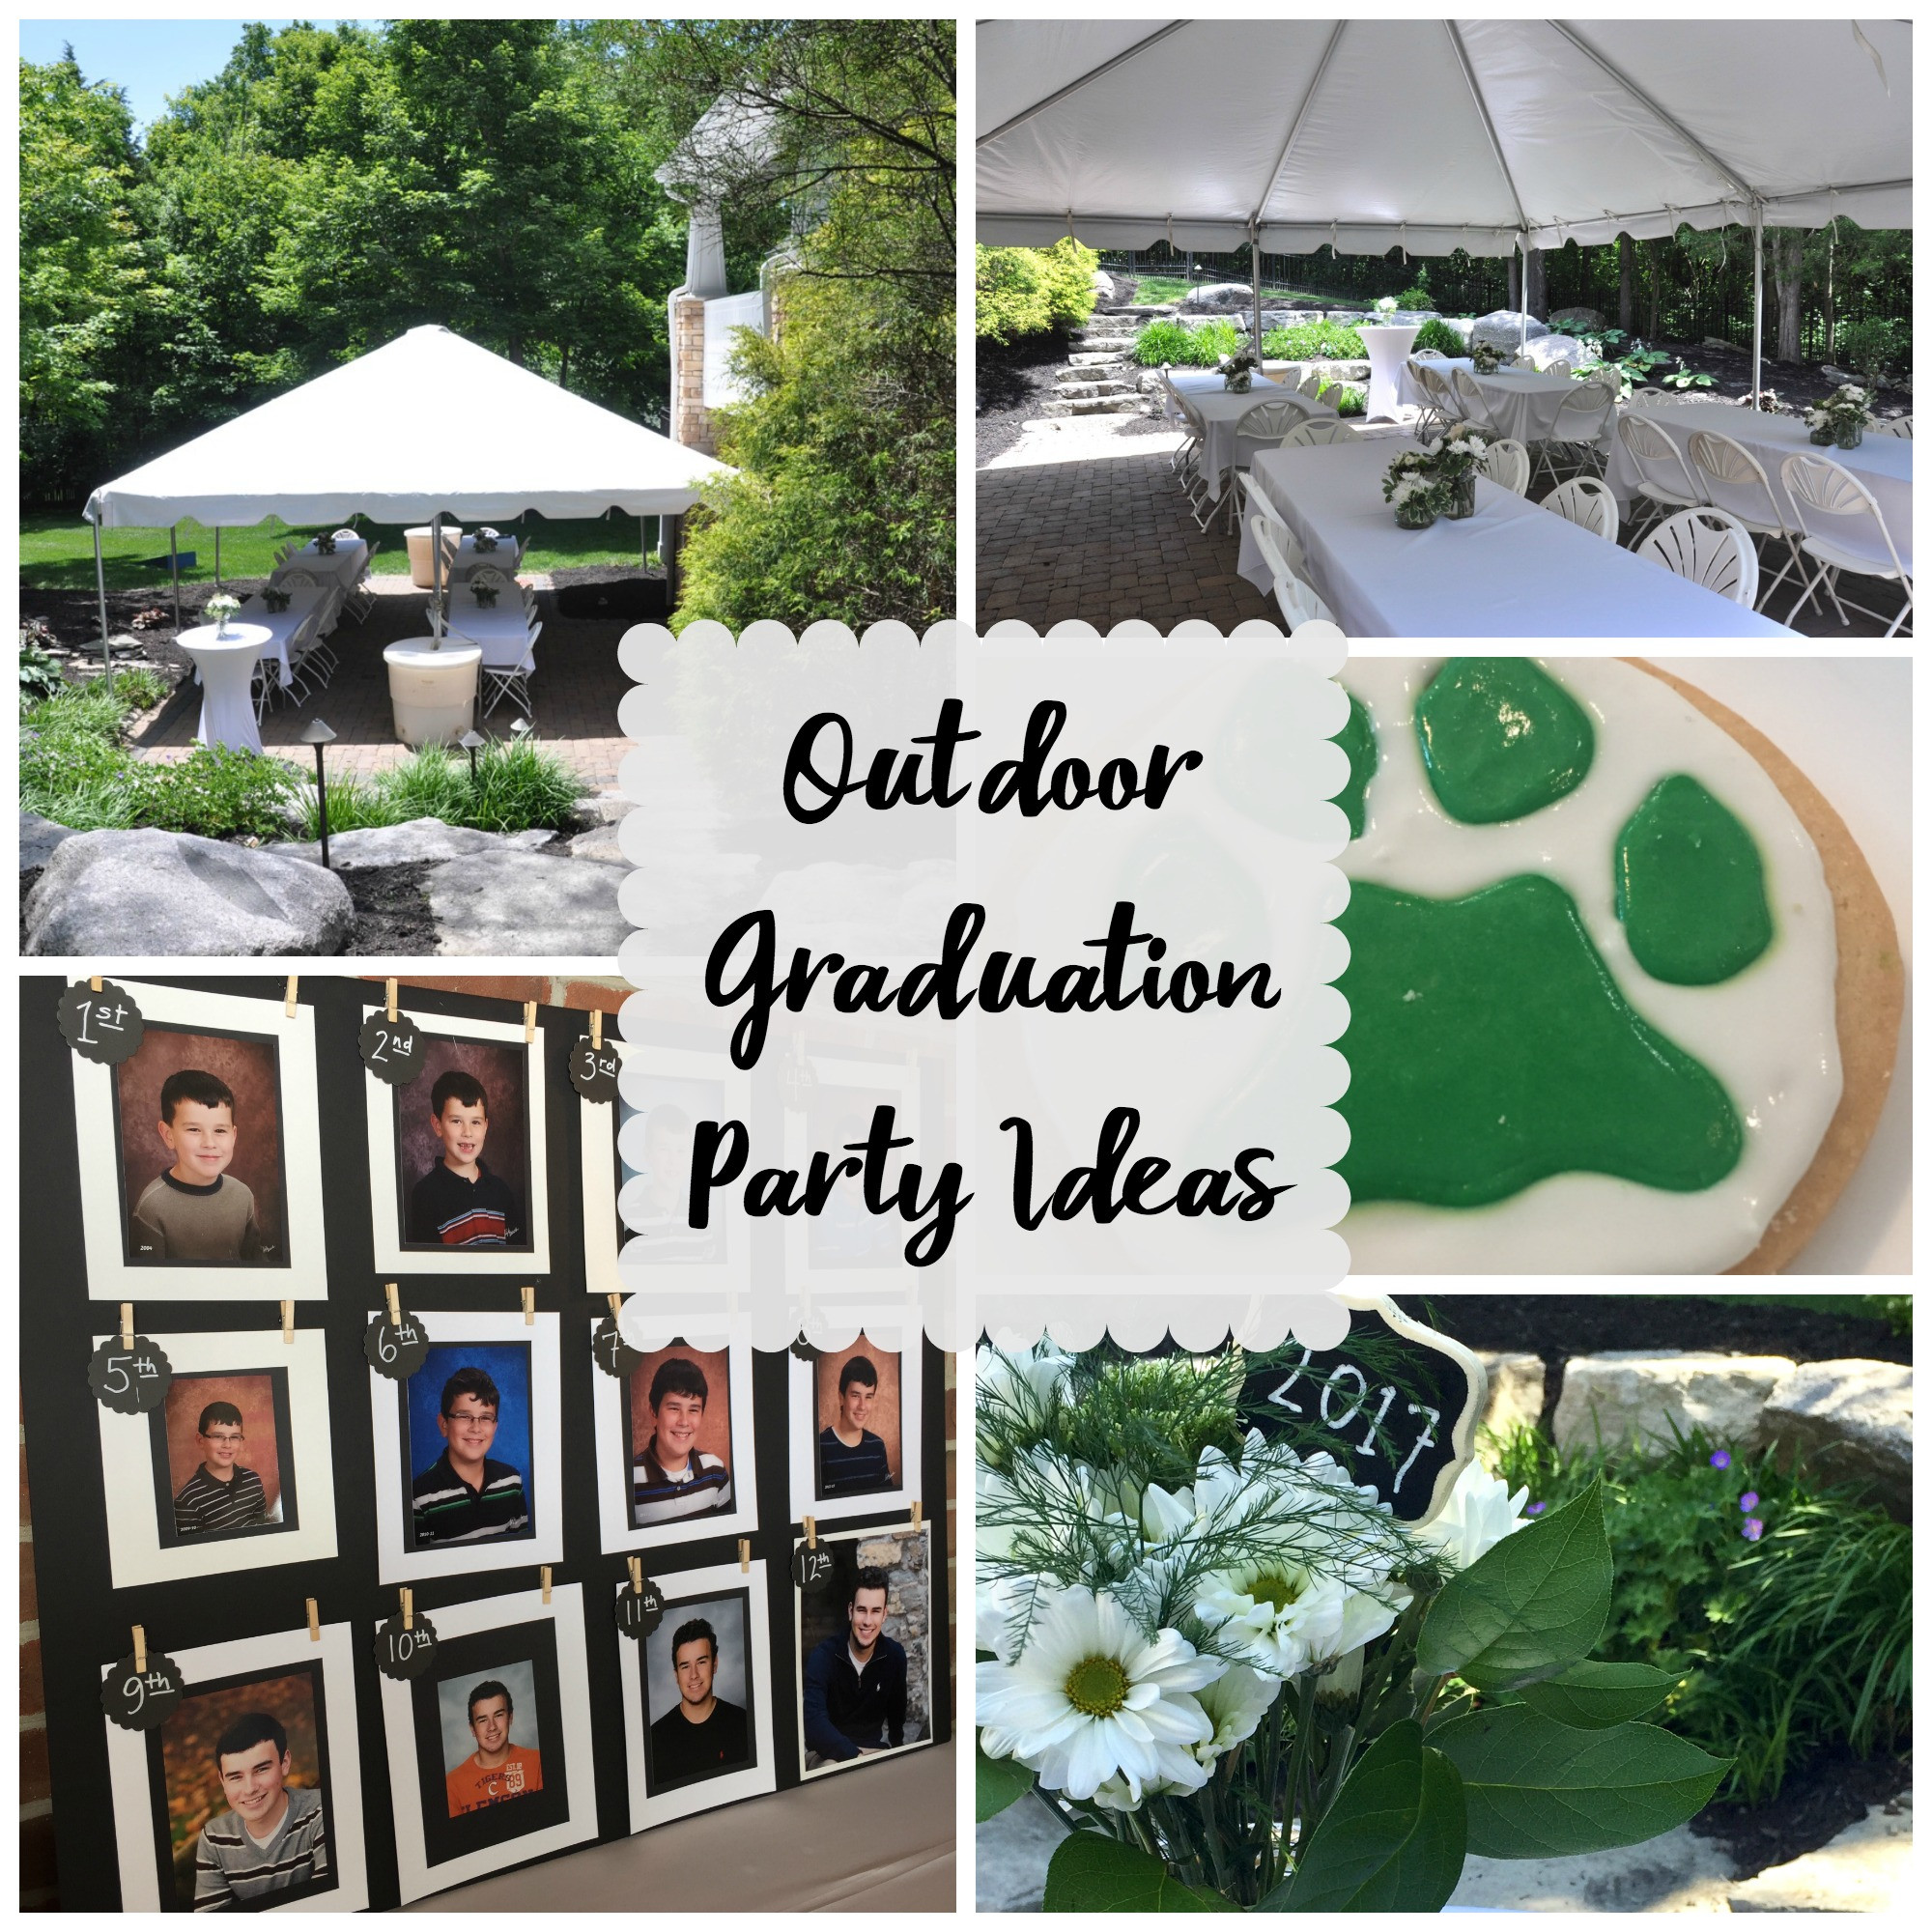 Graduate School Graduation Party Ideas
 Outdoor Graduation Party Evolution of Style